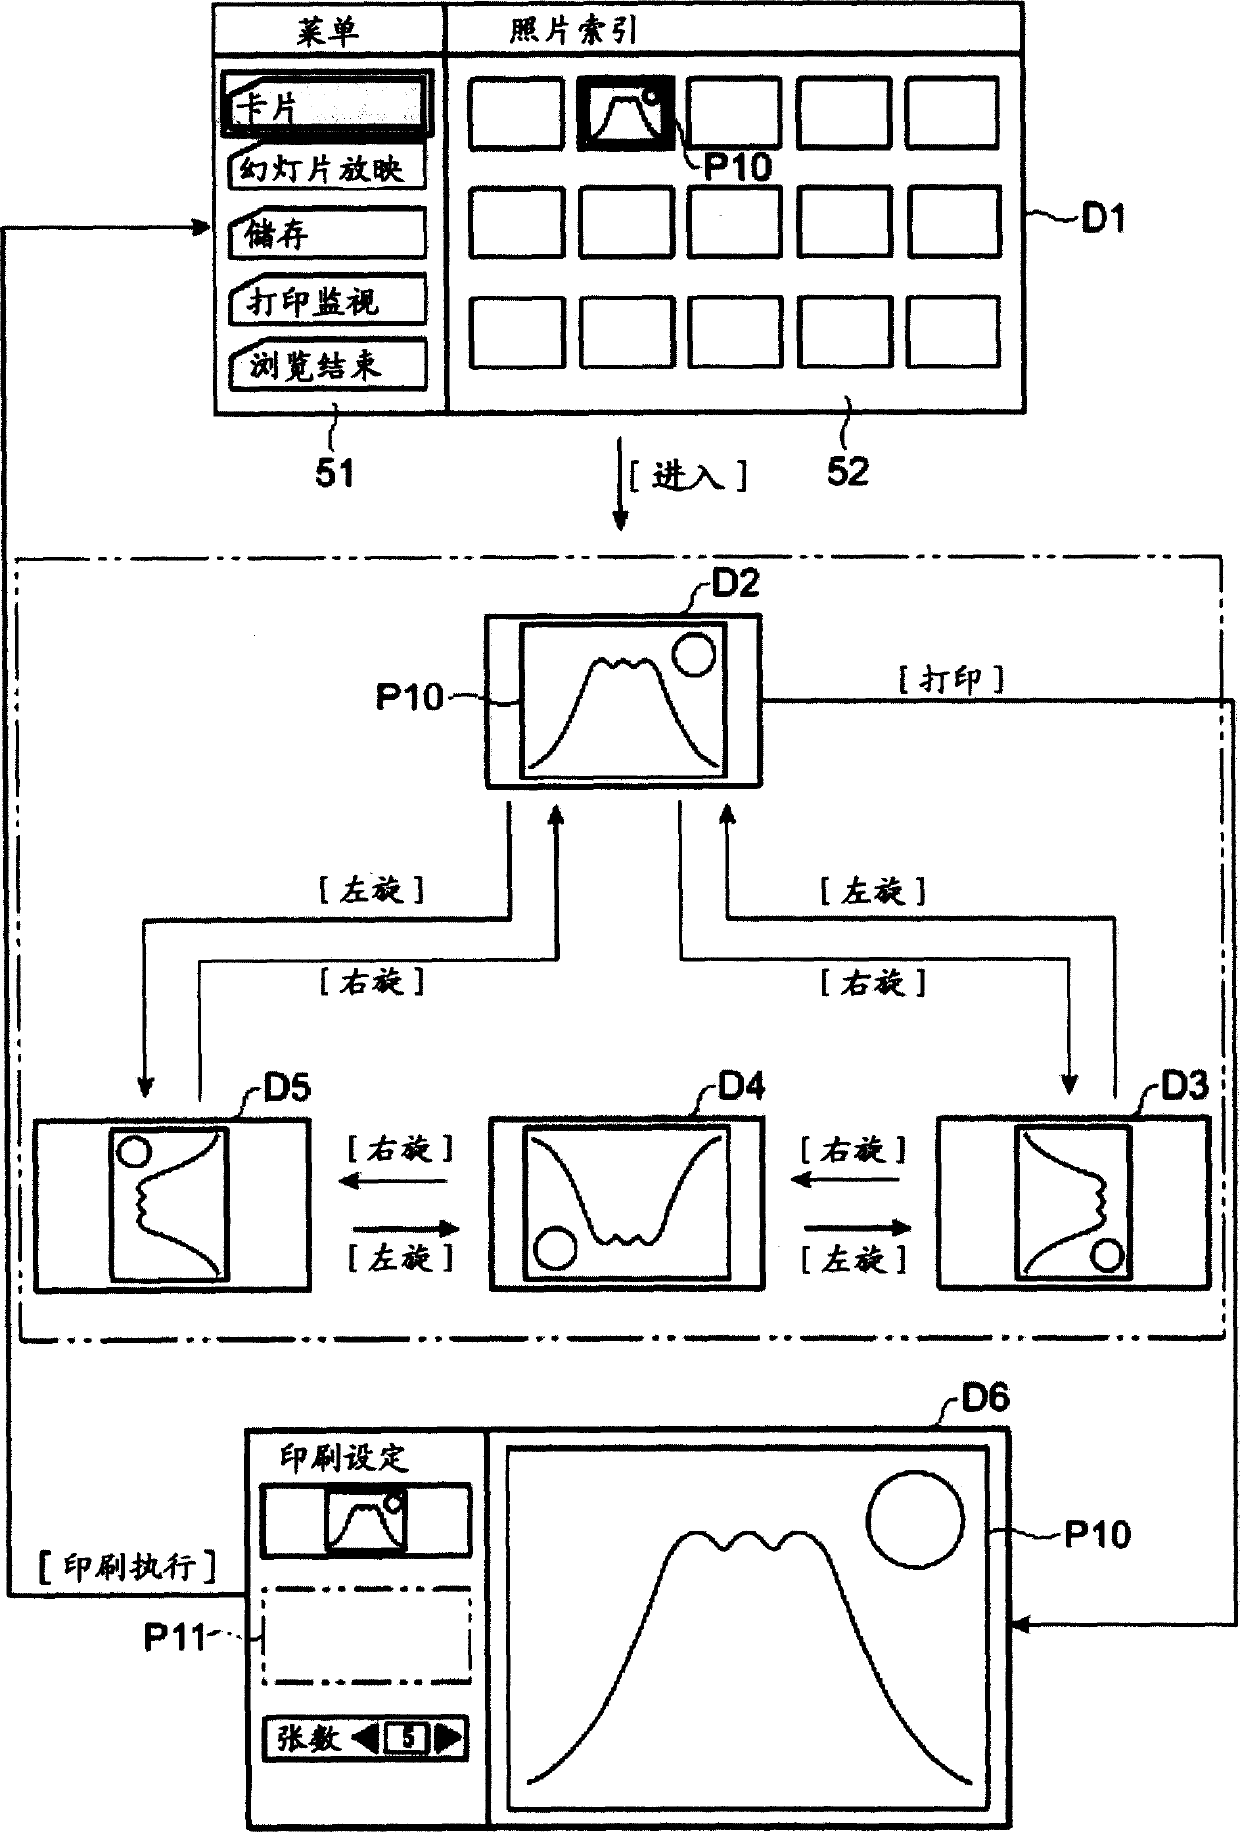 Image processing system, image display apparatus, printer, and printing method